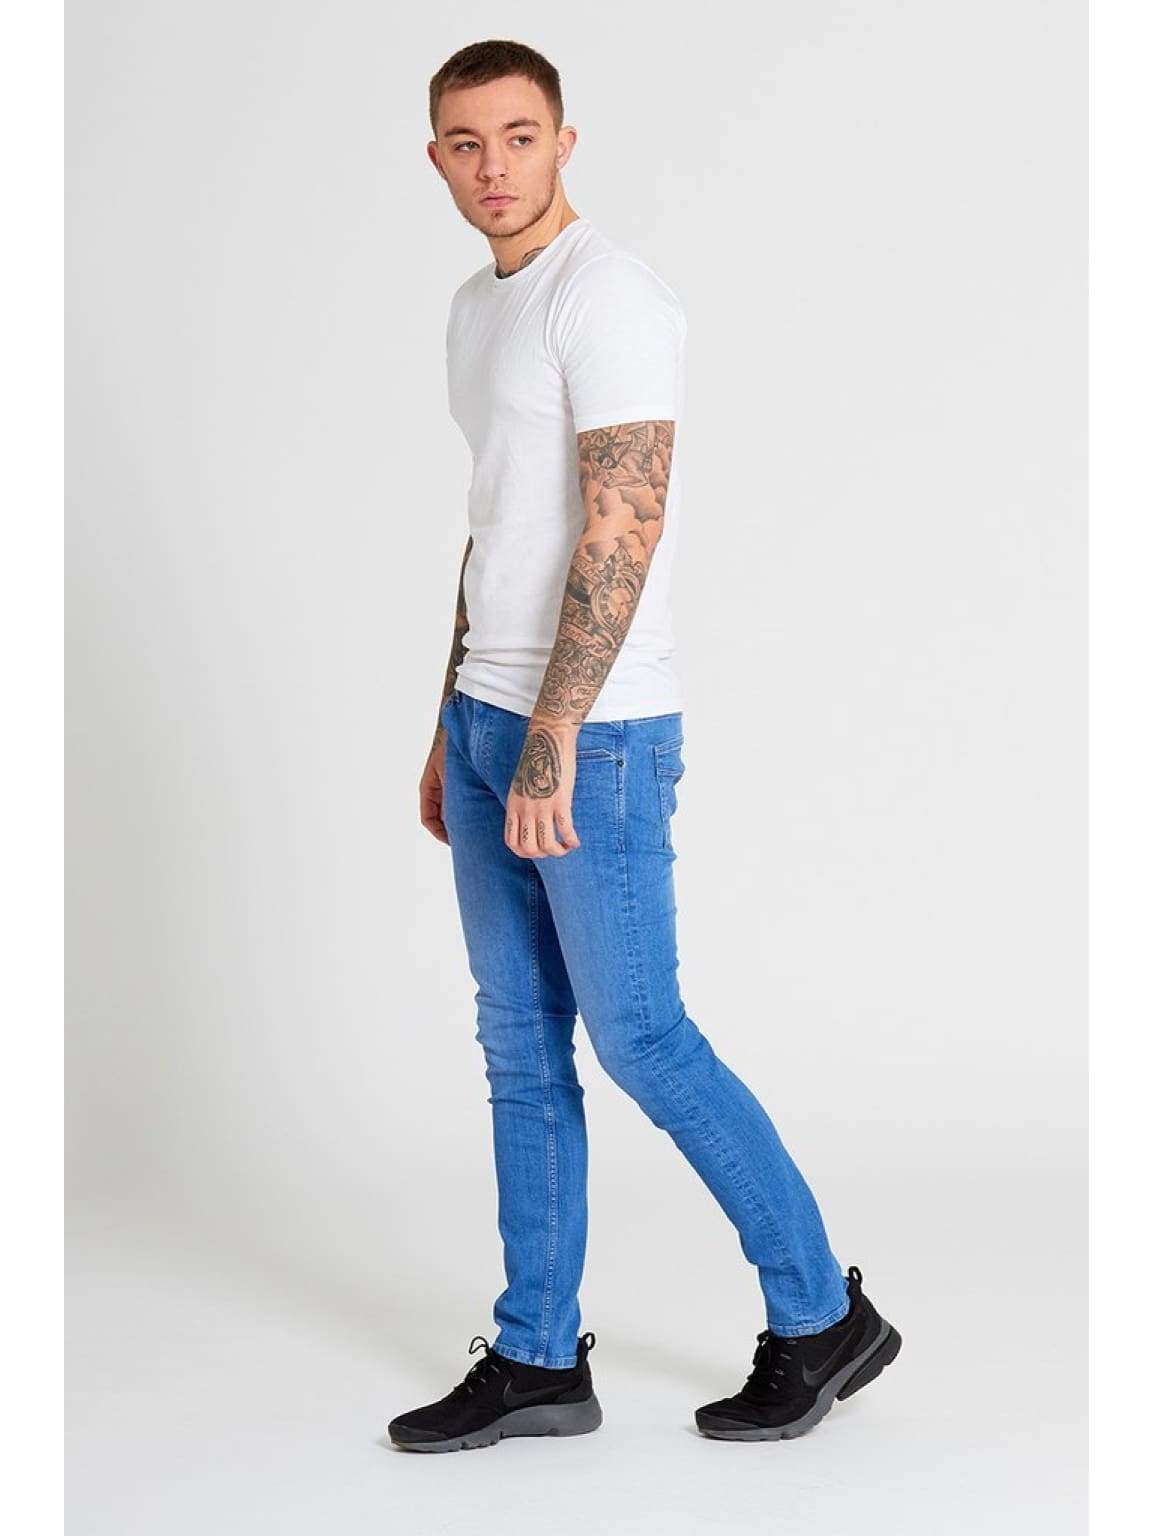 GAMMA Slim Fit Jeans In Intense Blue Wash - HIRE5 Menswear